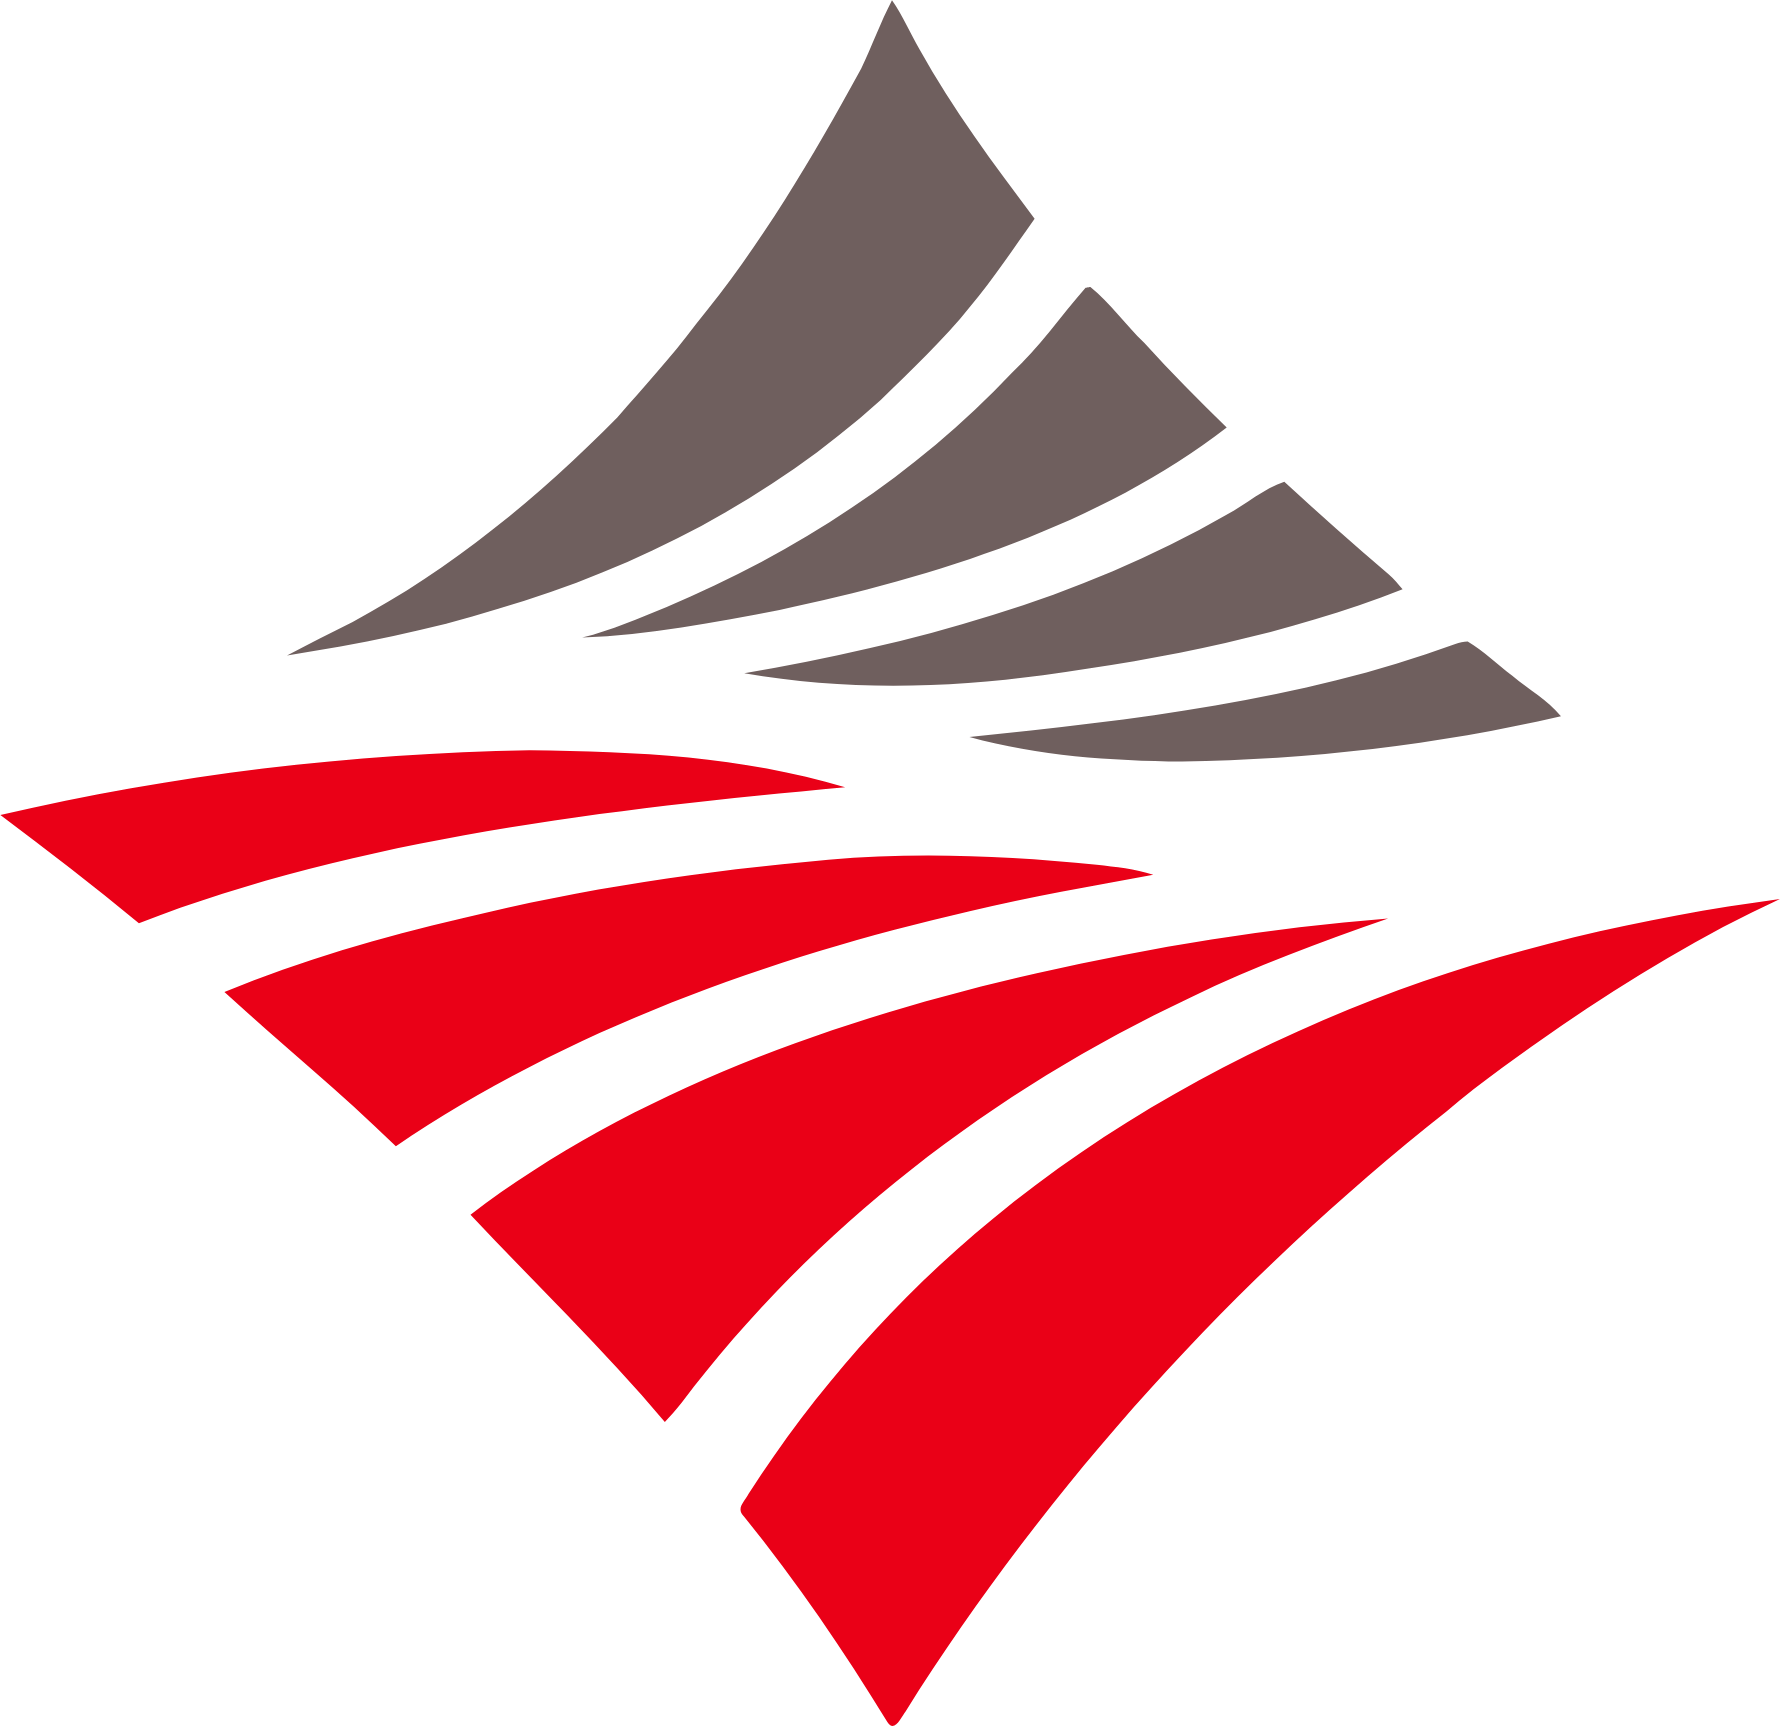 Frasers Logistics & Industrial Trust logo (PNG transparent)